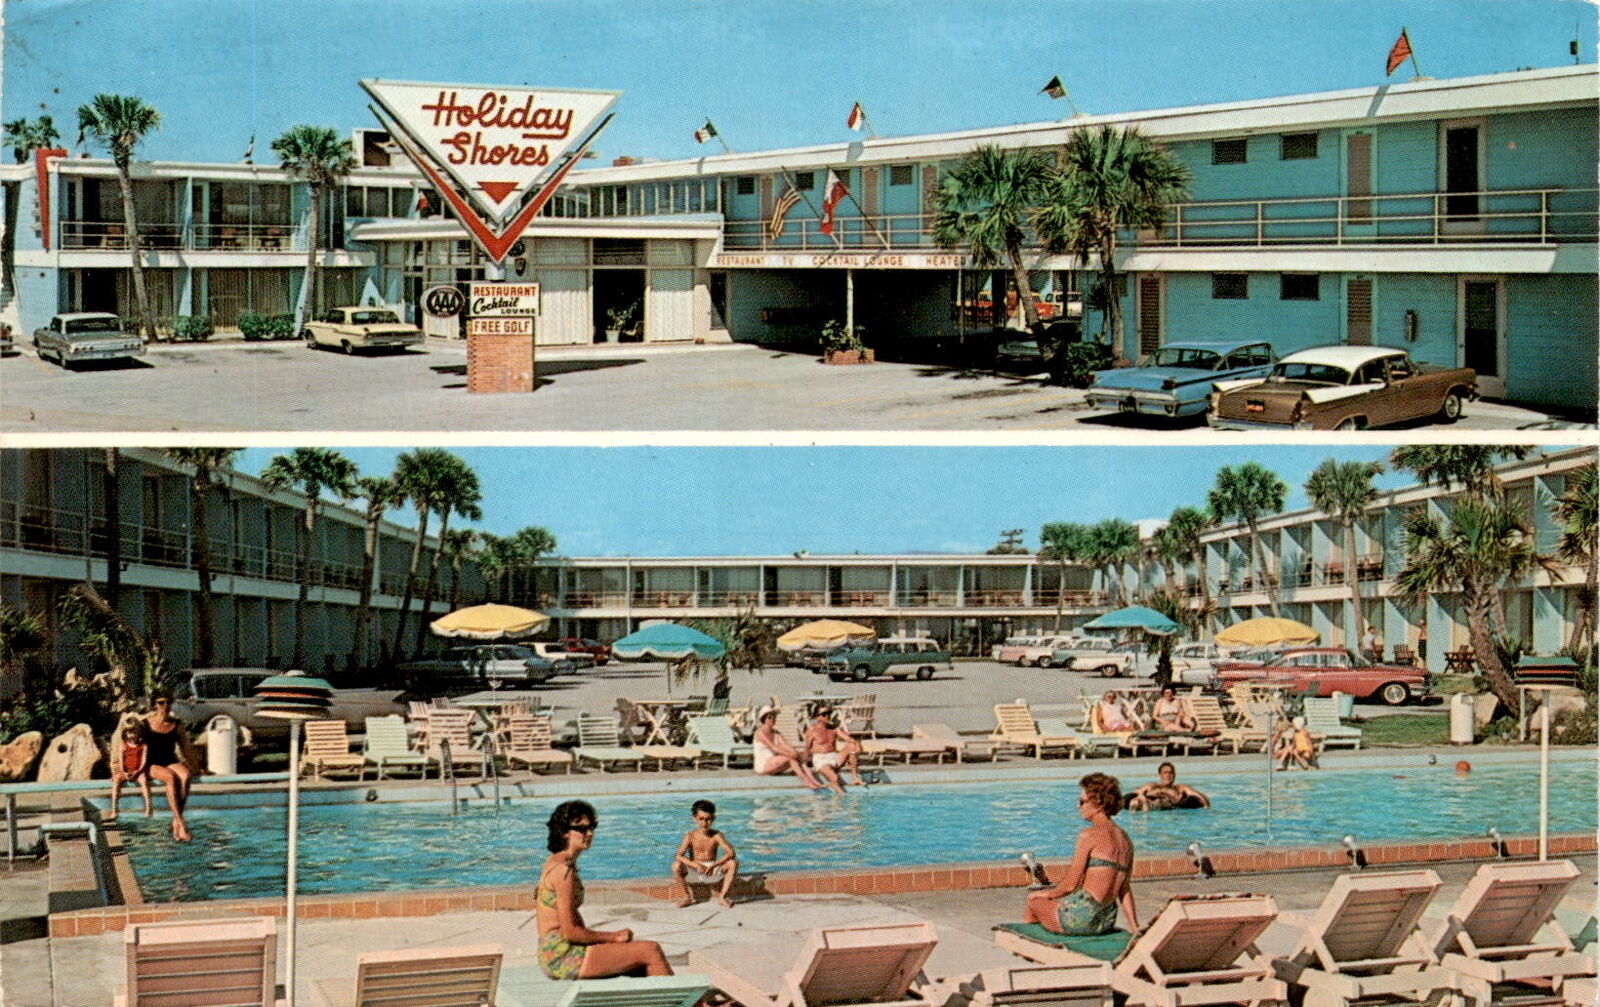 Daytona Beach: Holiday Shores Motel Postcard, 1968 postcard